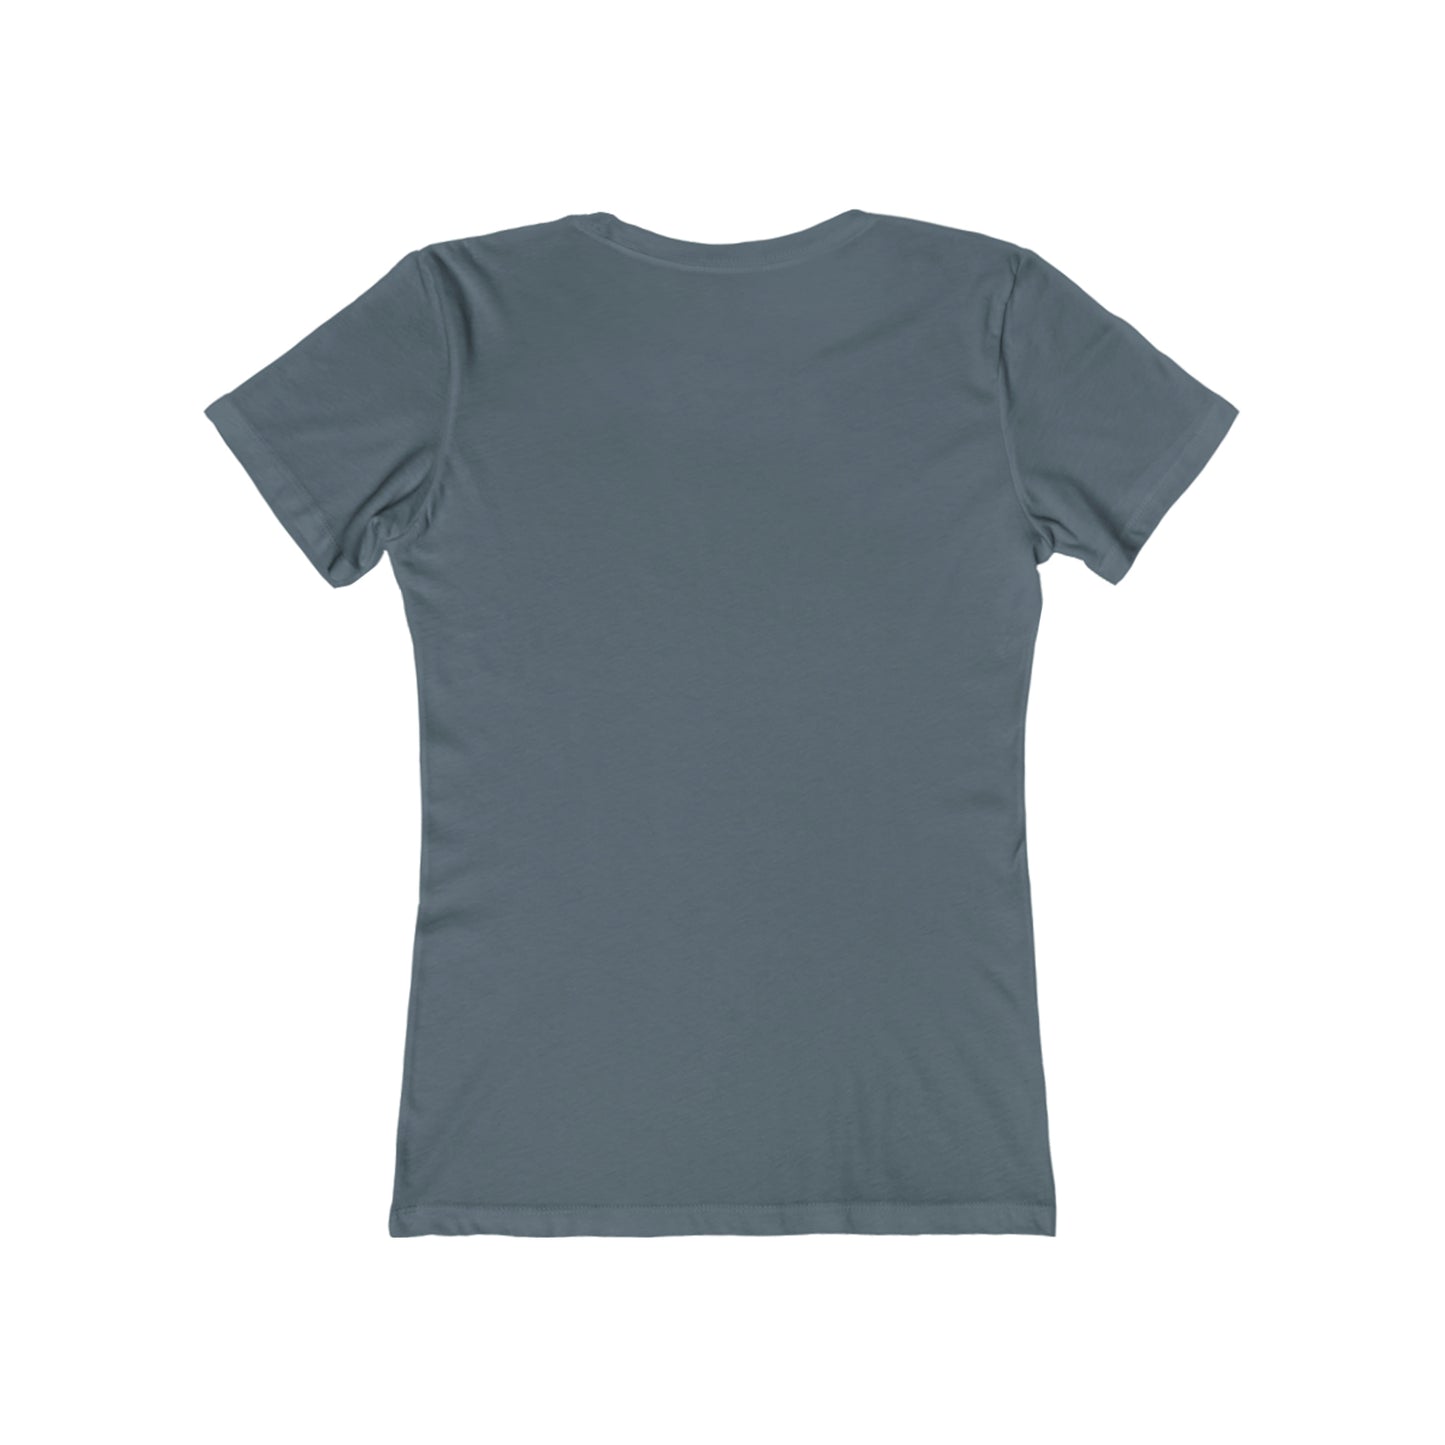 Upper Peninsula T-Shirt (w/ Orange UP Outline) | Women's Boyfriend Cut